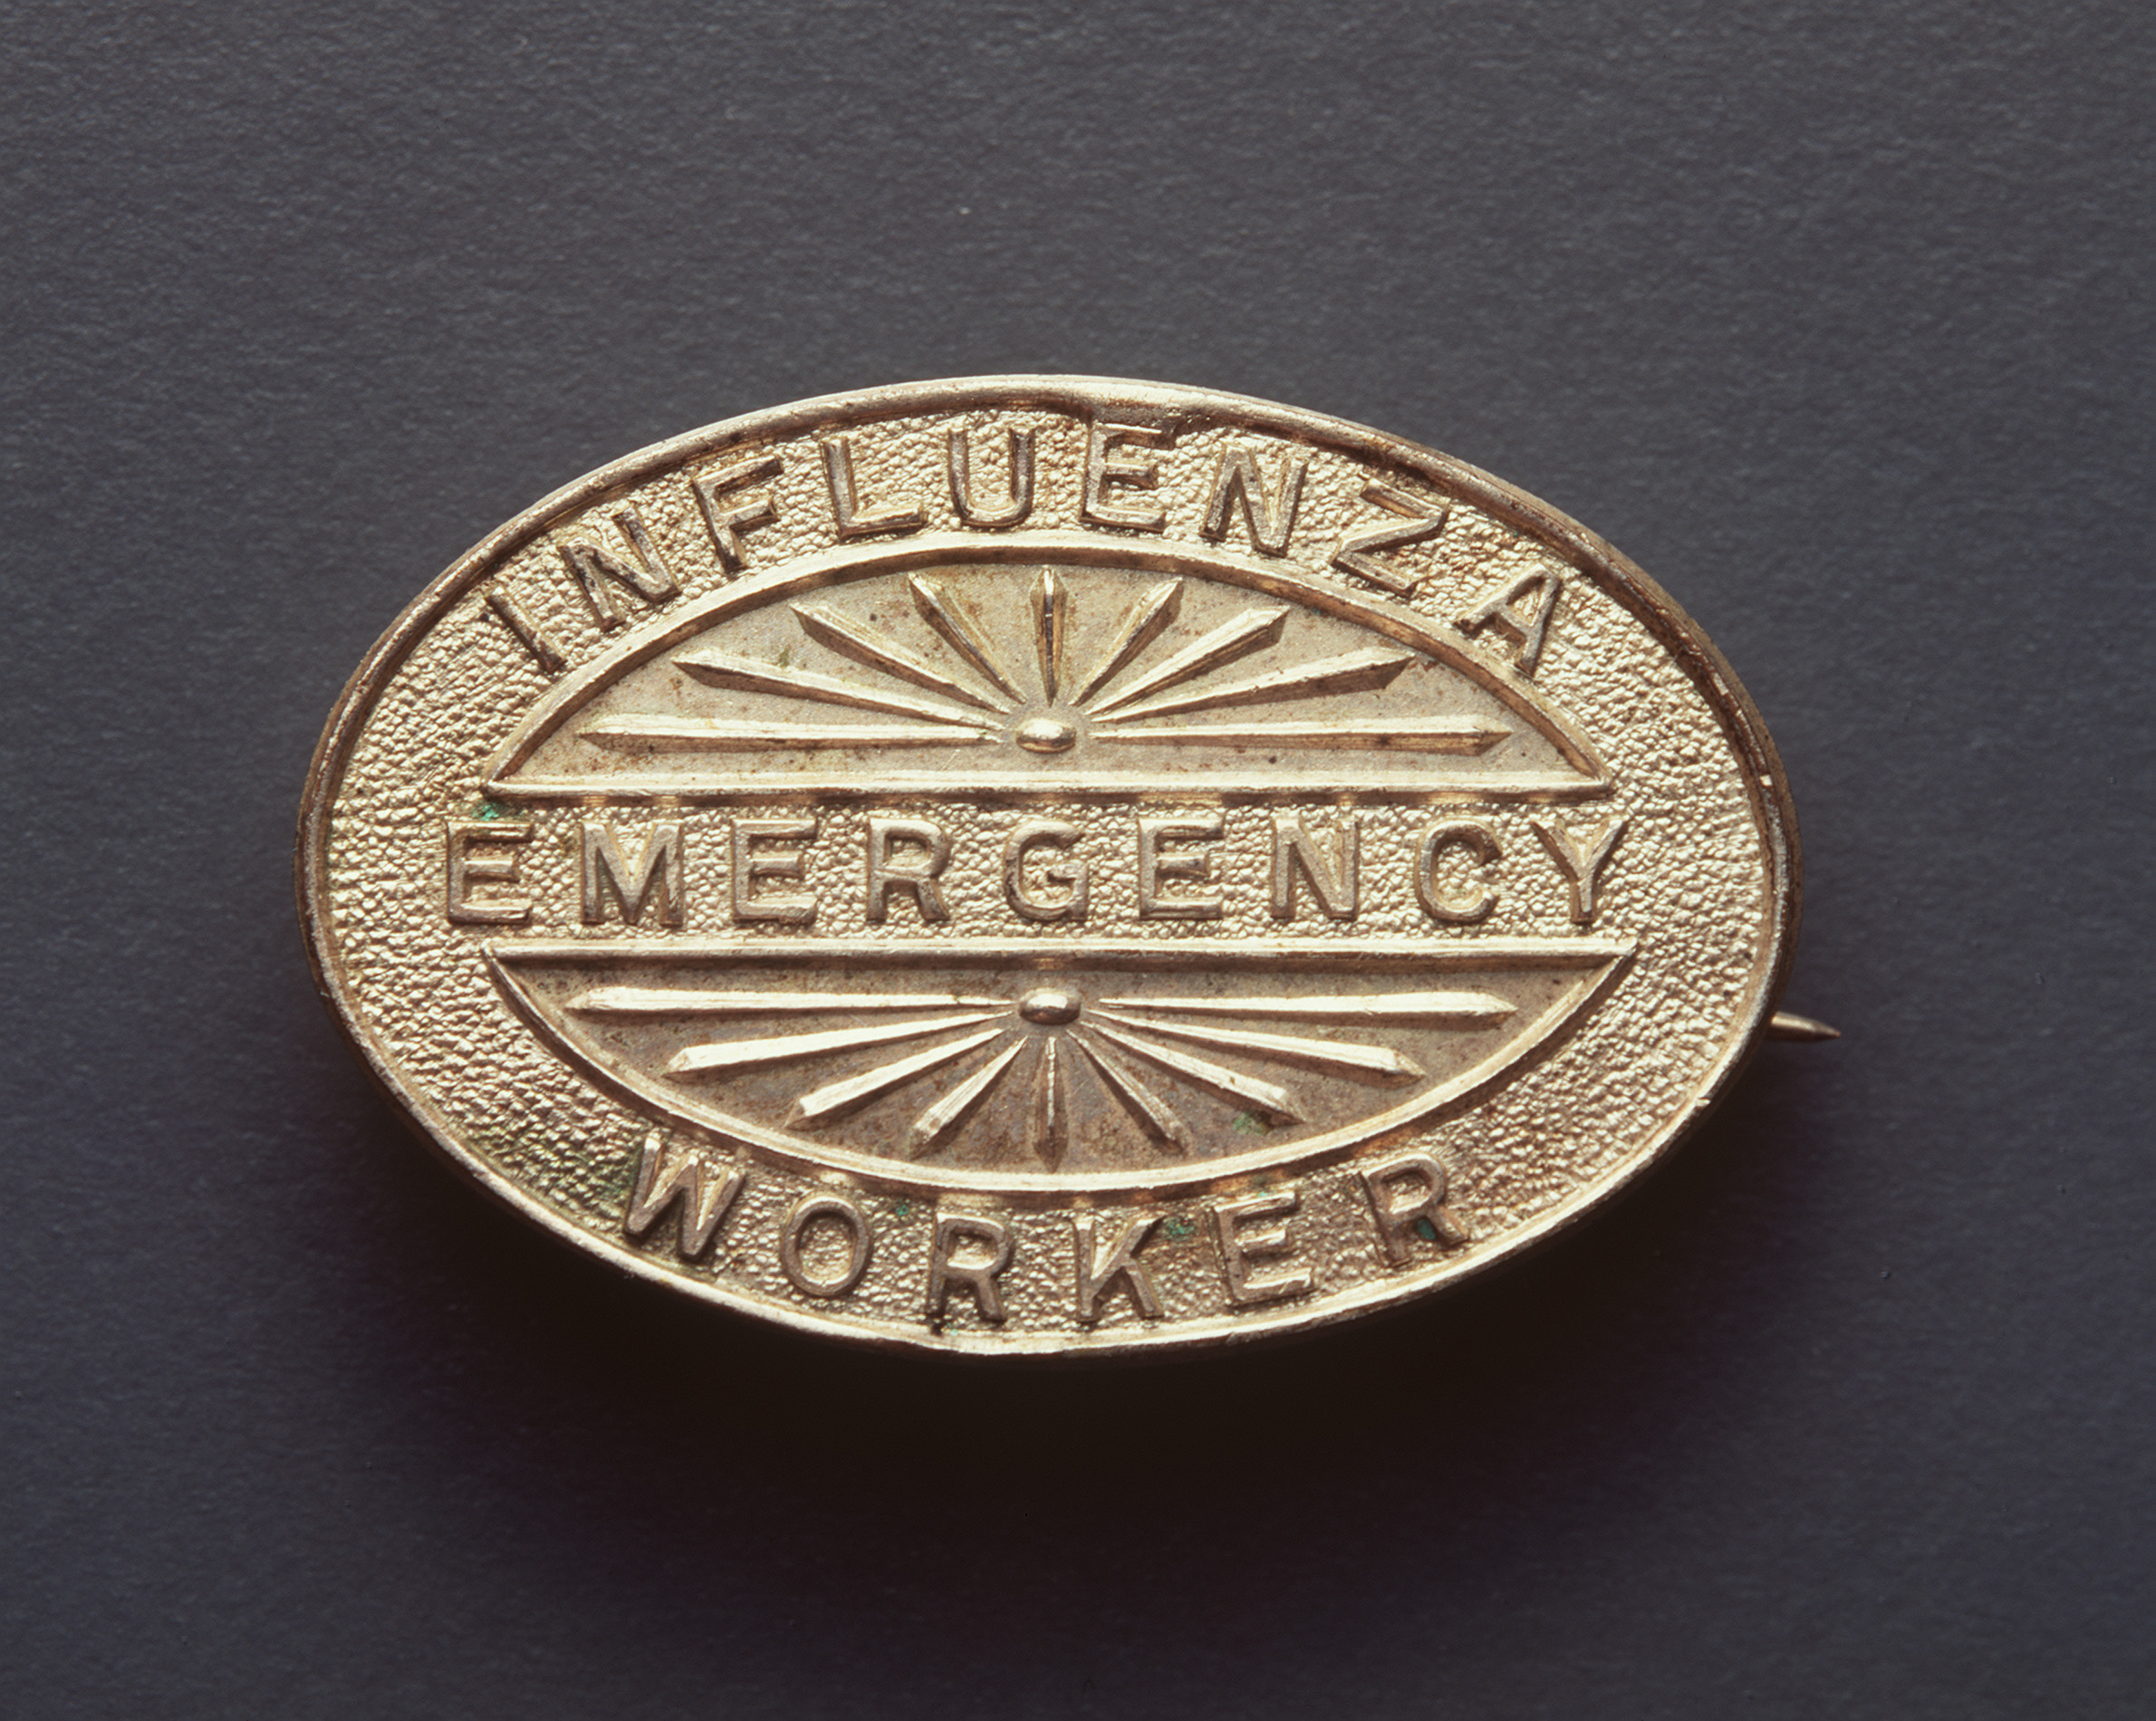 Influenza Emergency Worker's badge, c.1919